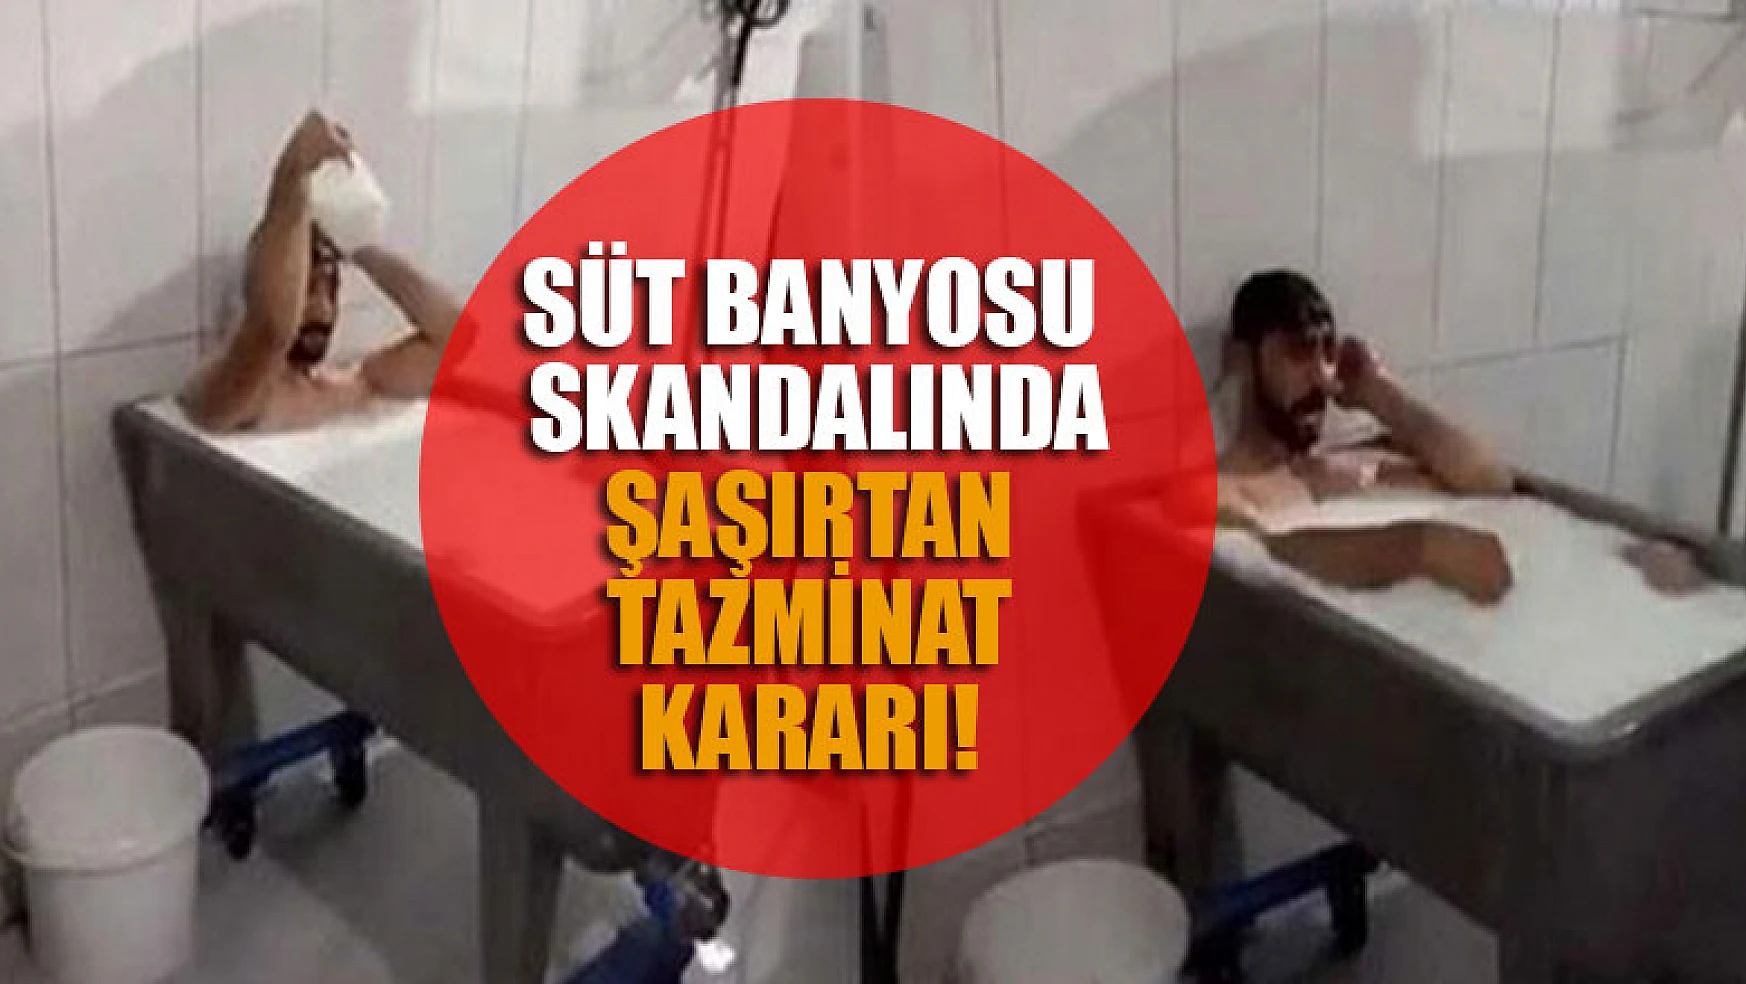 Konya'daki süt banyosu skandalı sonrası şaşırtan tazminat kararı!